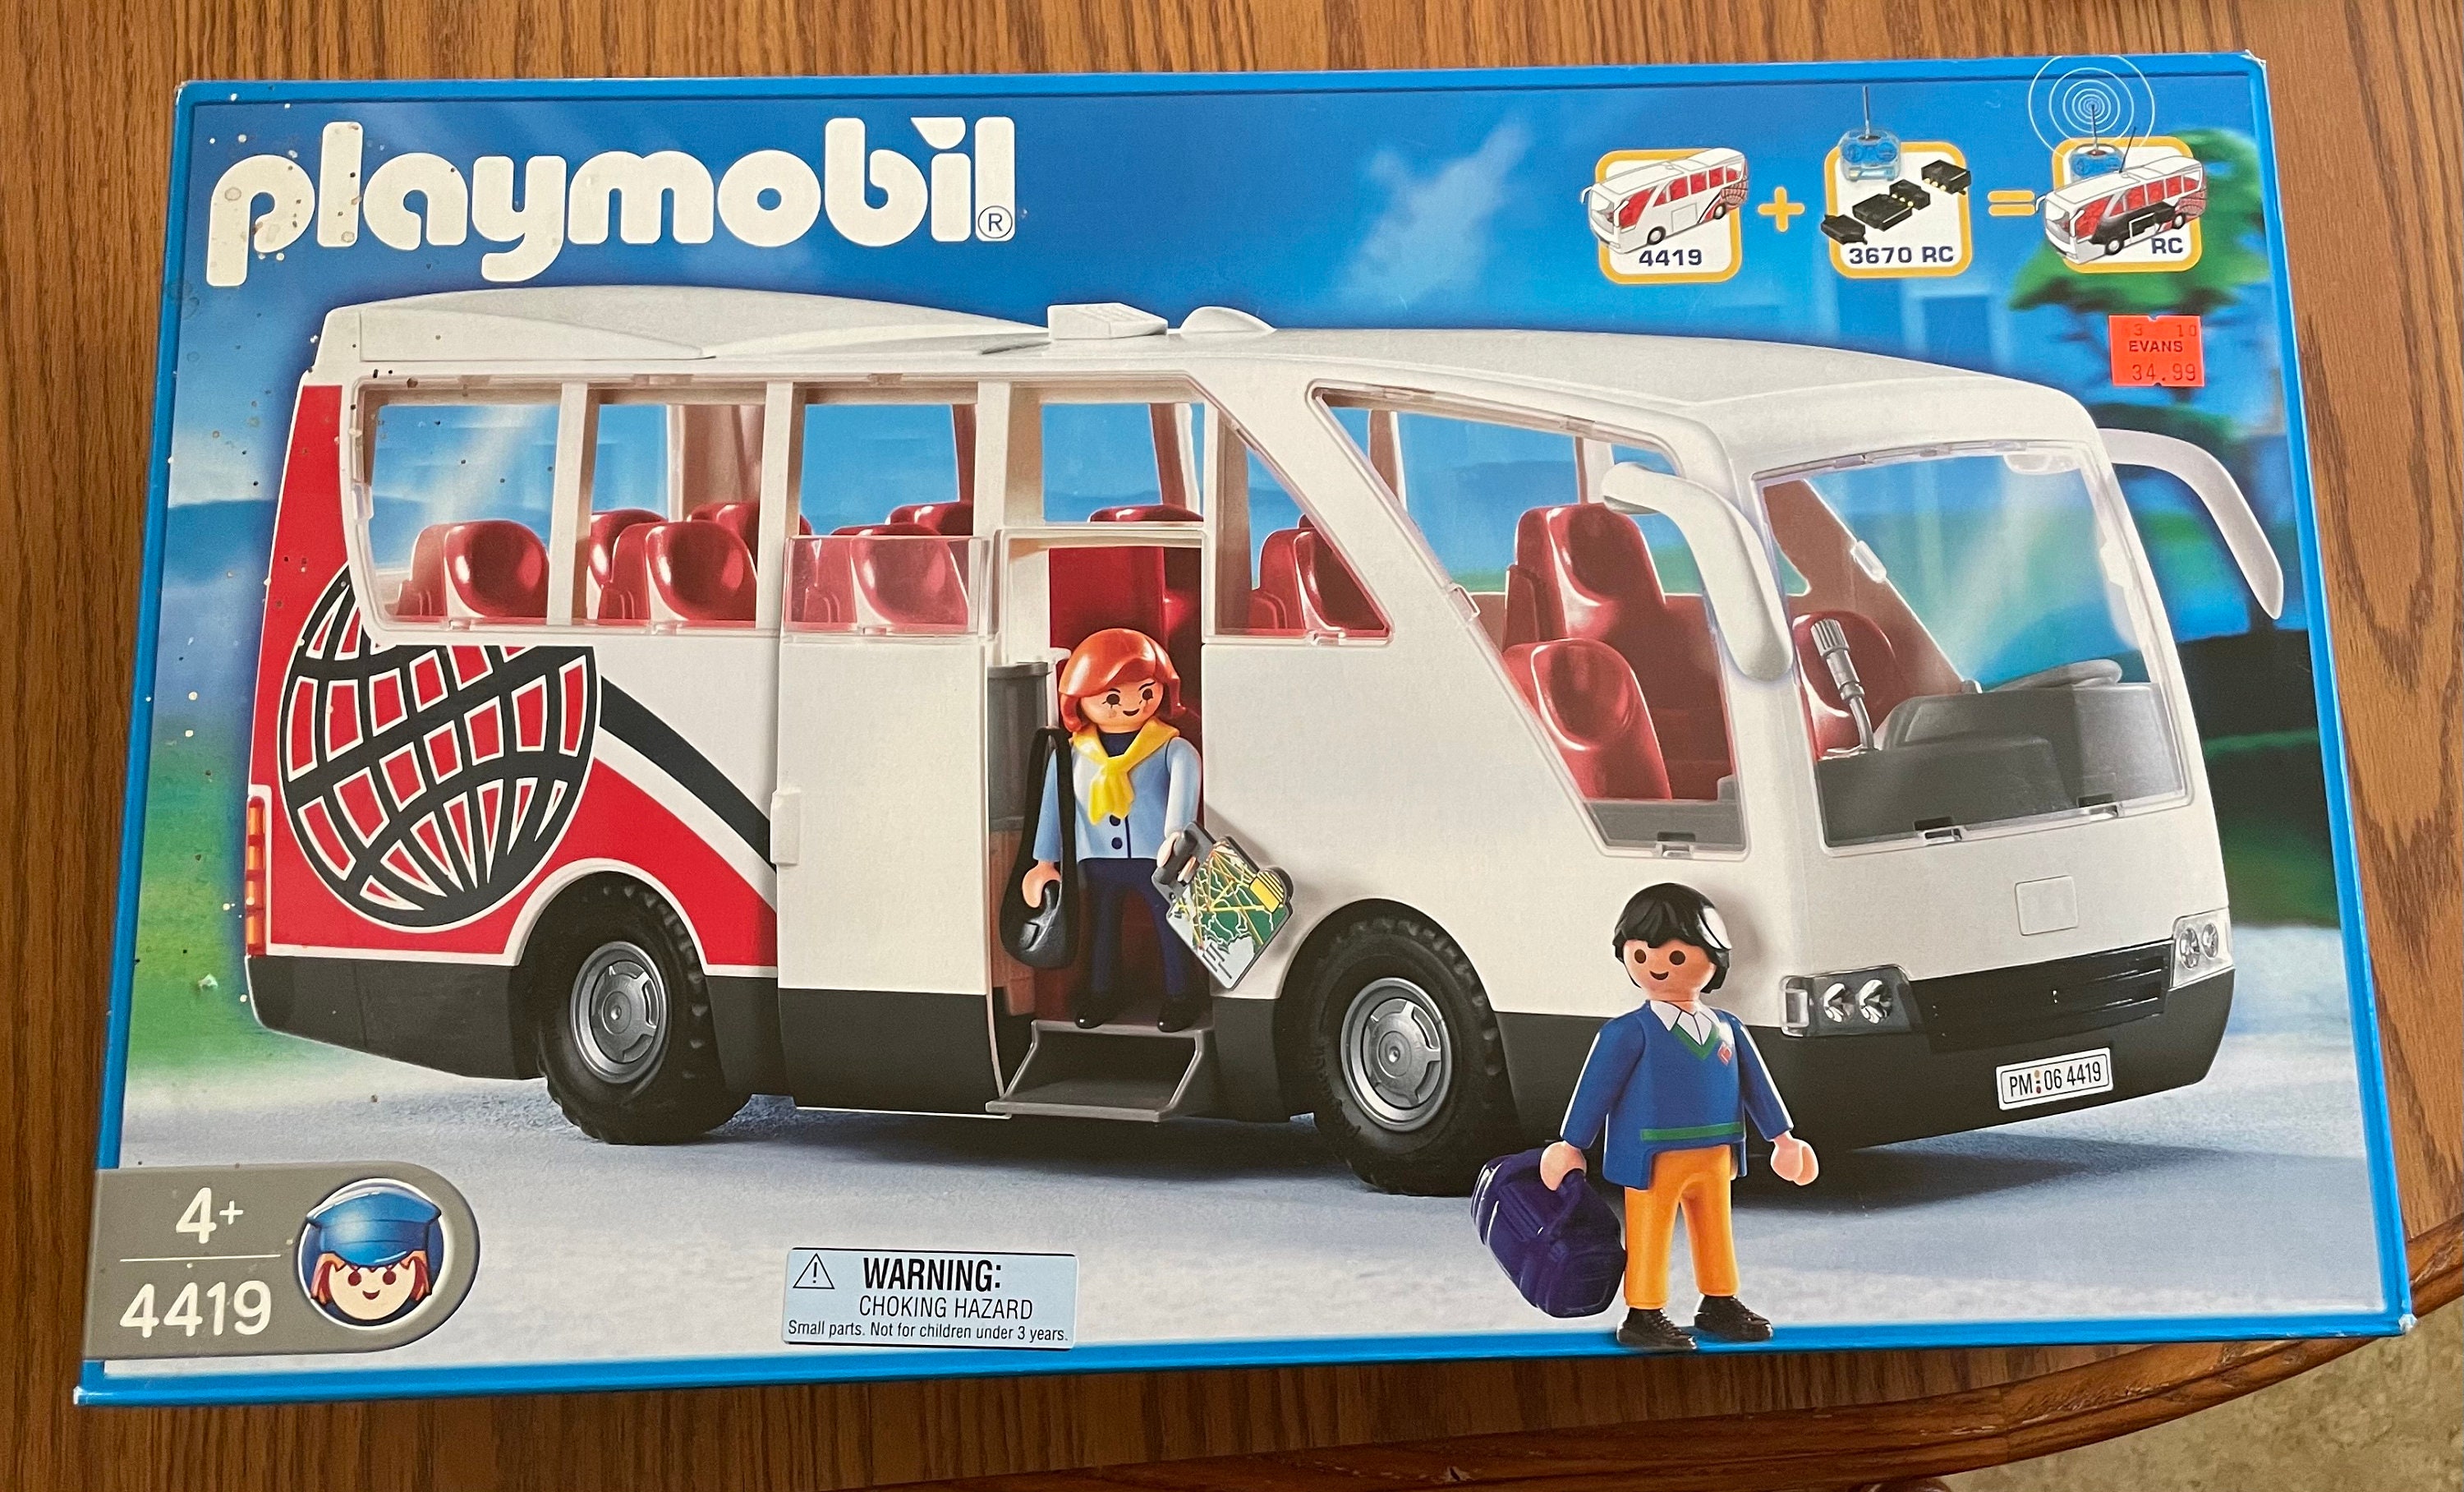 Playmobil 4419 Coach Holiday - Etsy